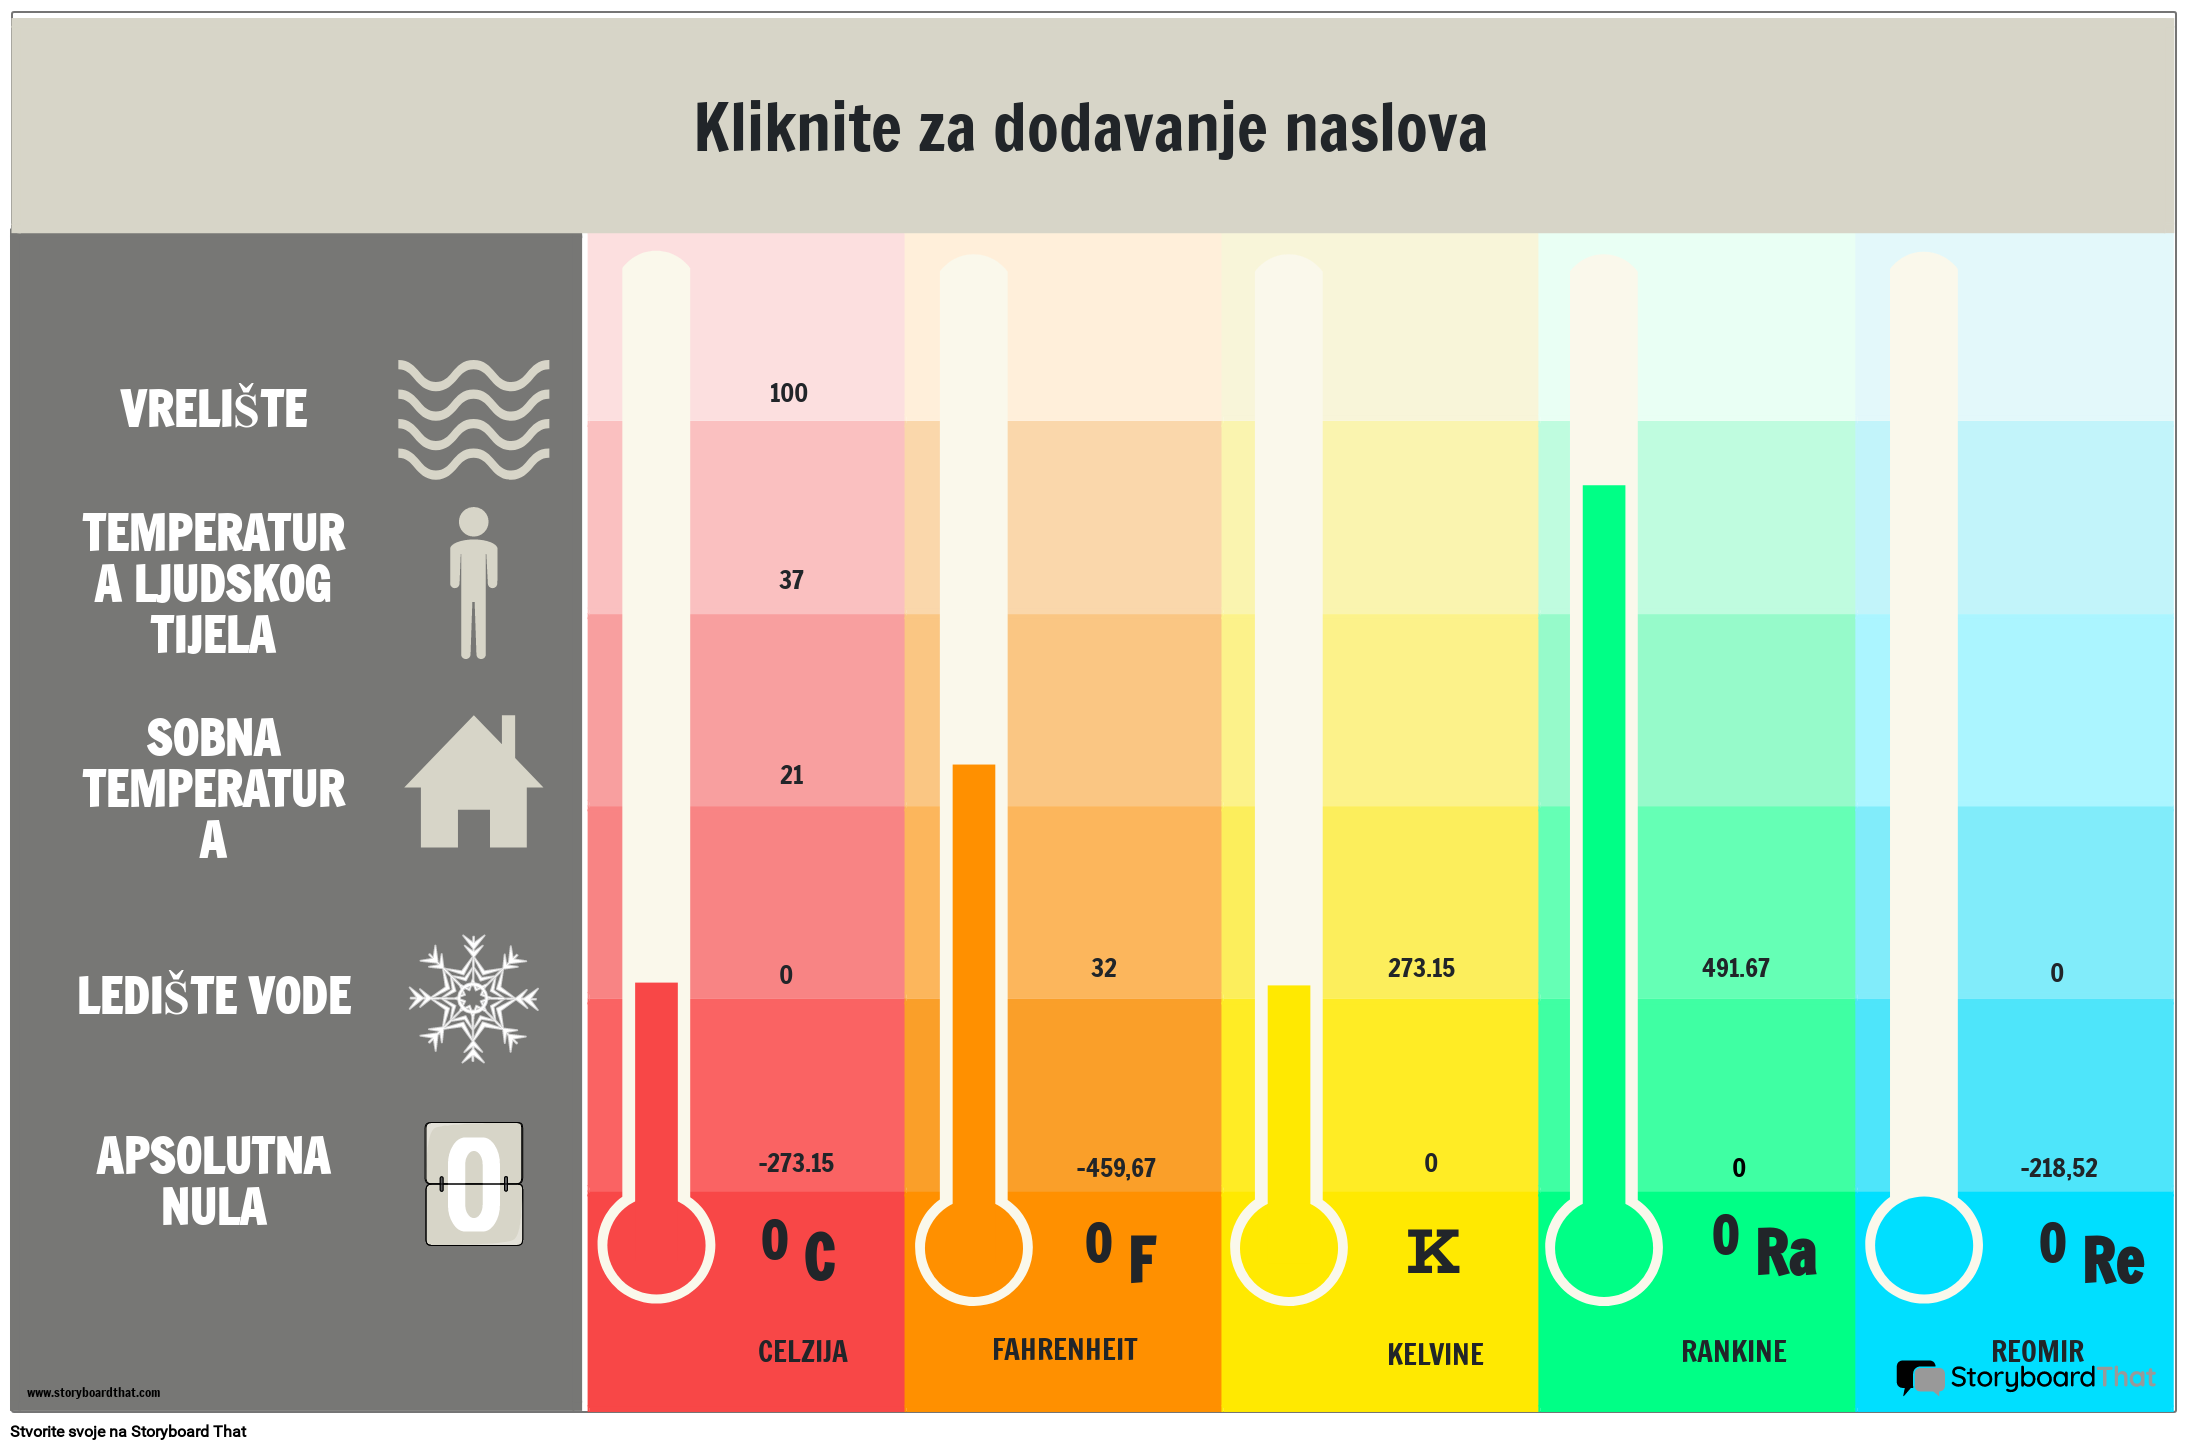 Poster temperaturne tablice za ispis s temperaturnim pretvorbama